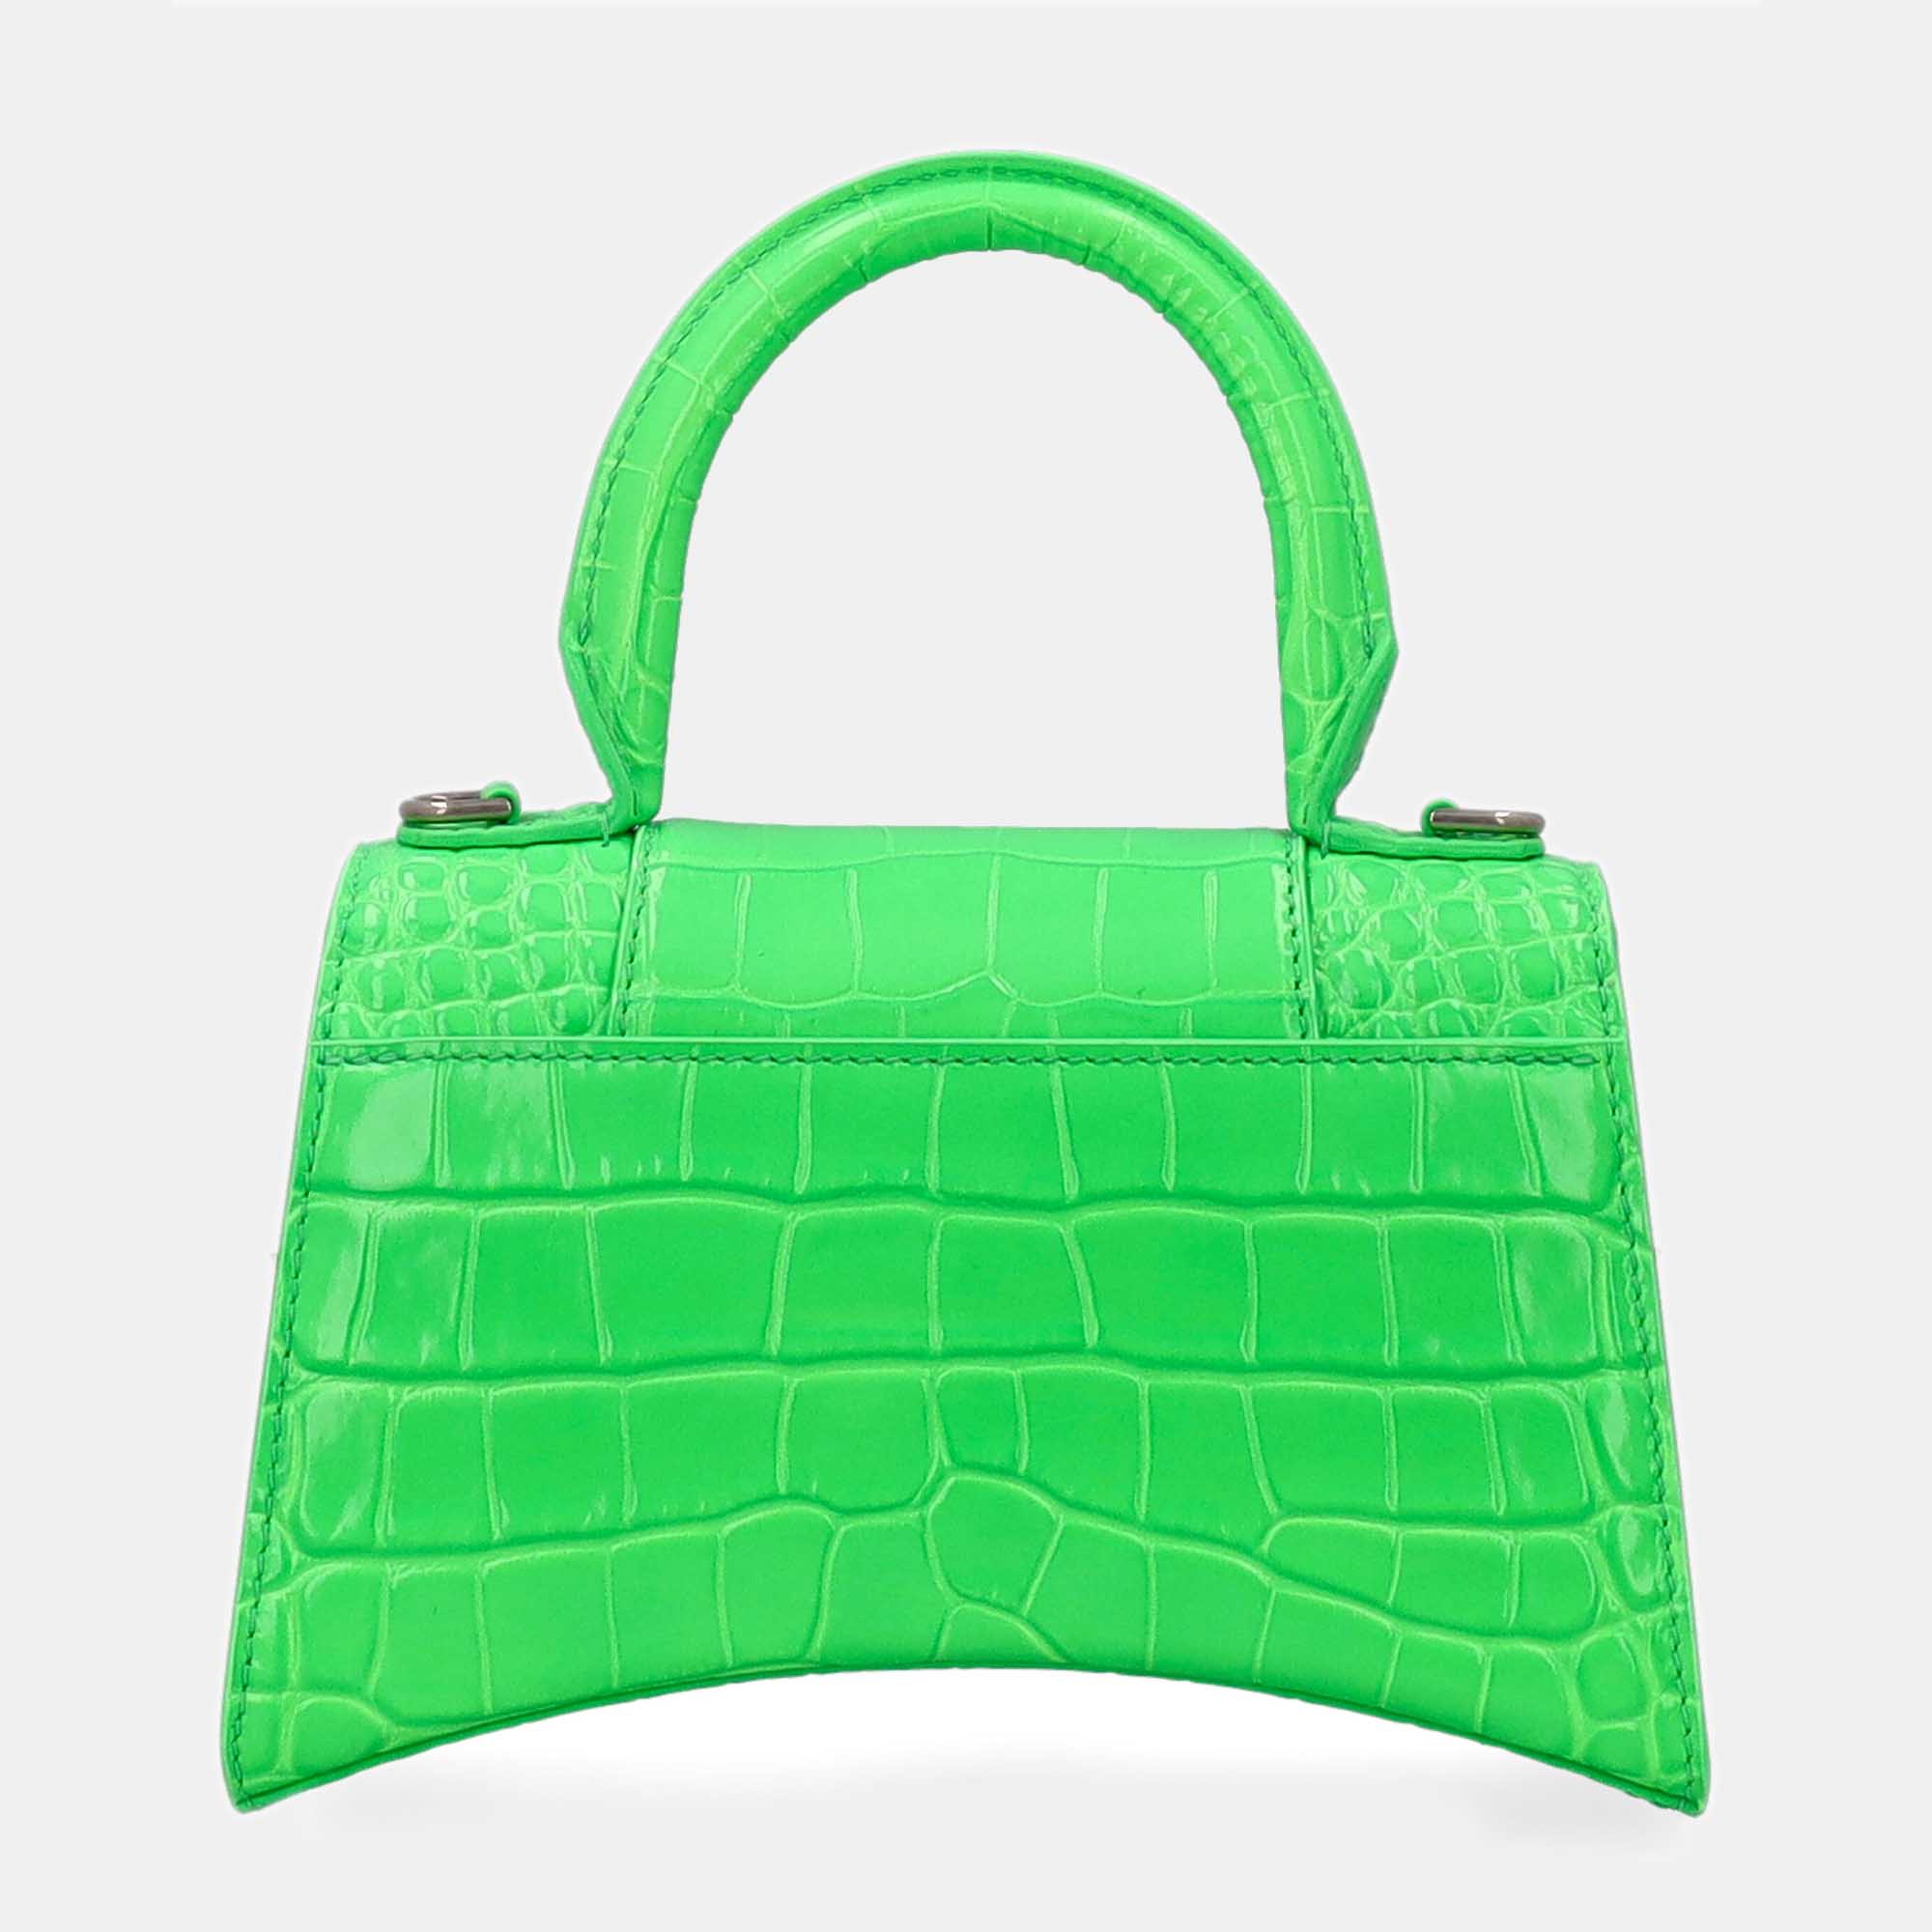 Balenciaga Hourglass Women's Leather Shoulder Bag - Green - One Size